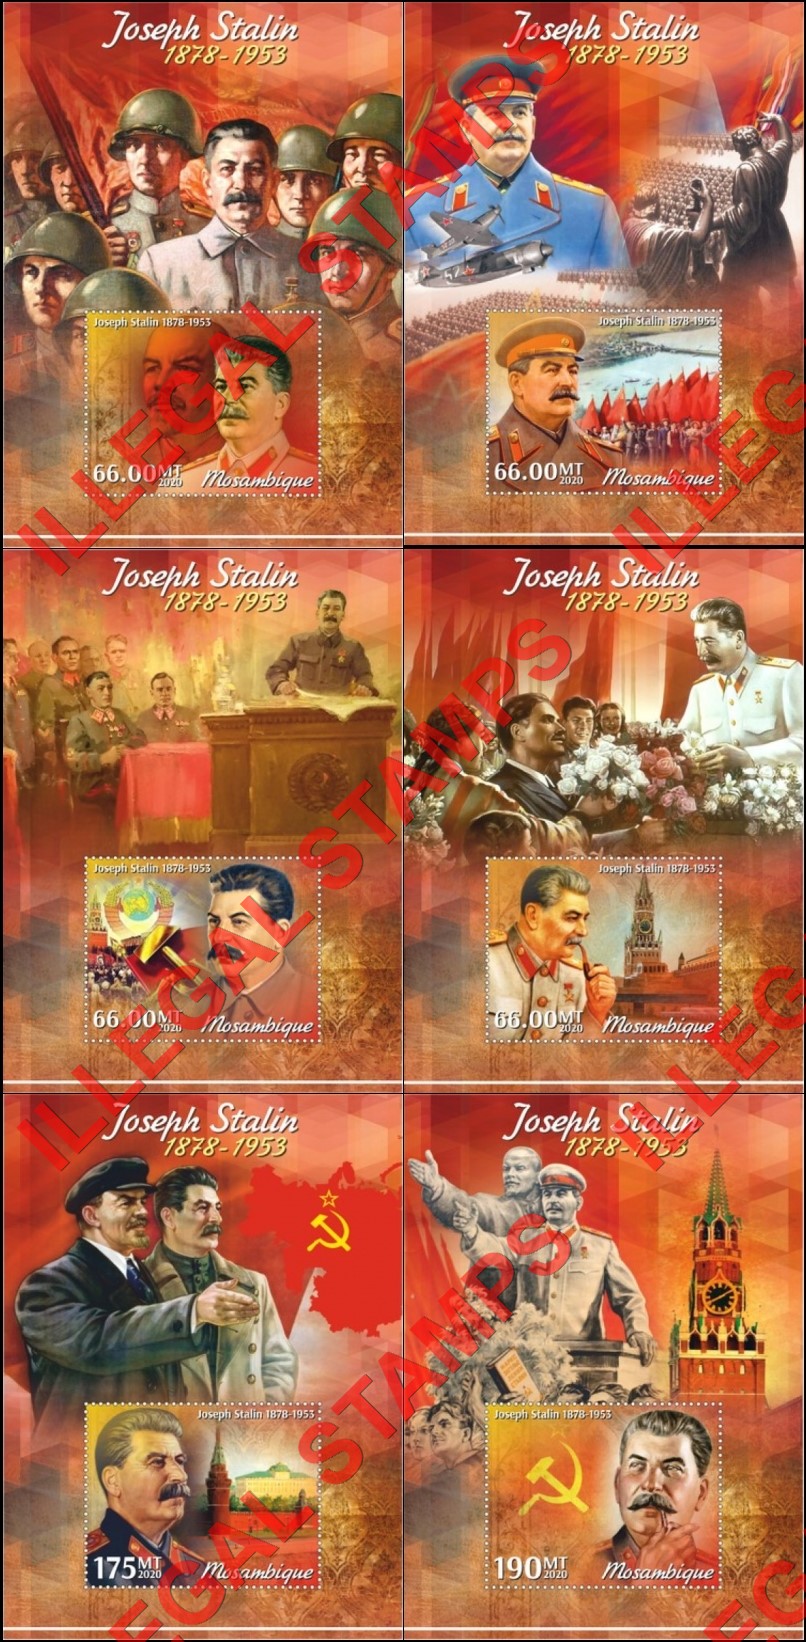  Mozambique 2020 Joseph Stalin (different b) Counterfeit Illegal Stamp Souvenir Sheets of 1